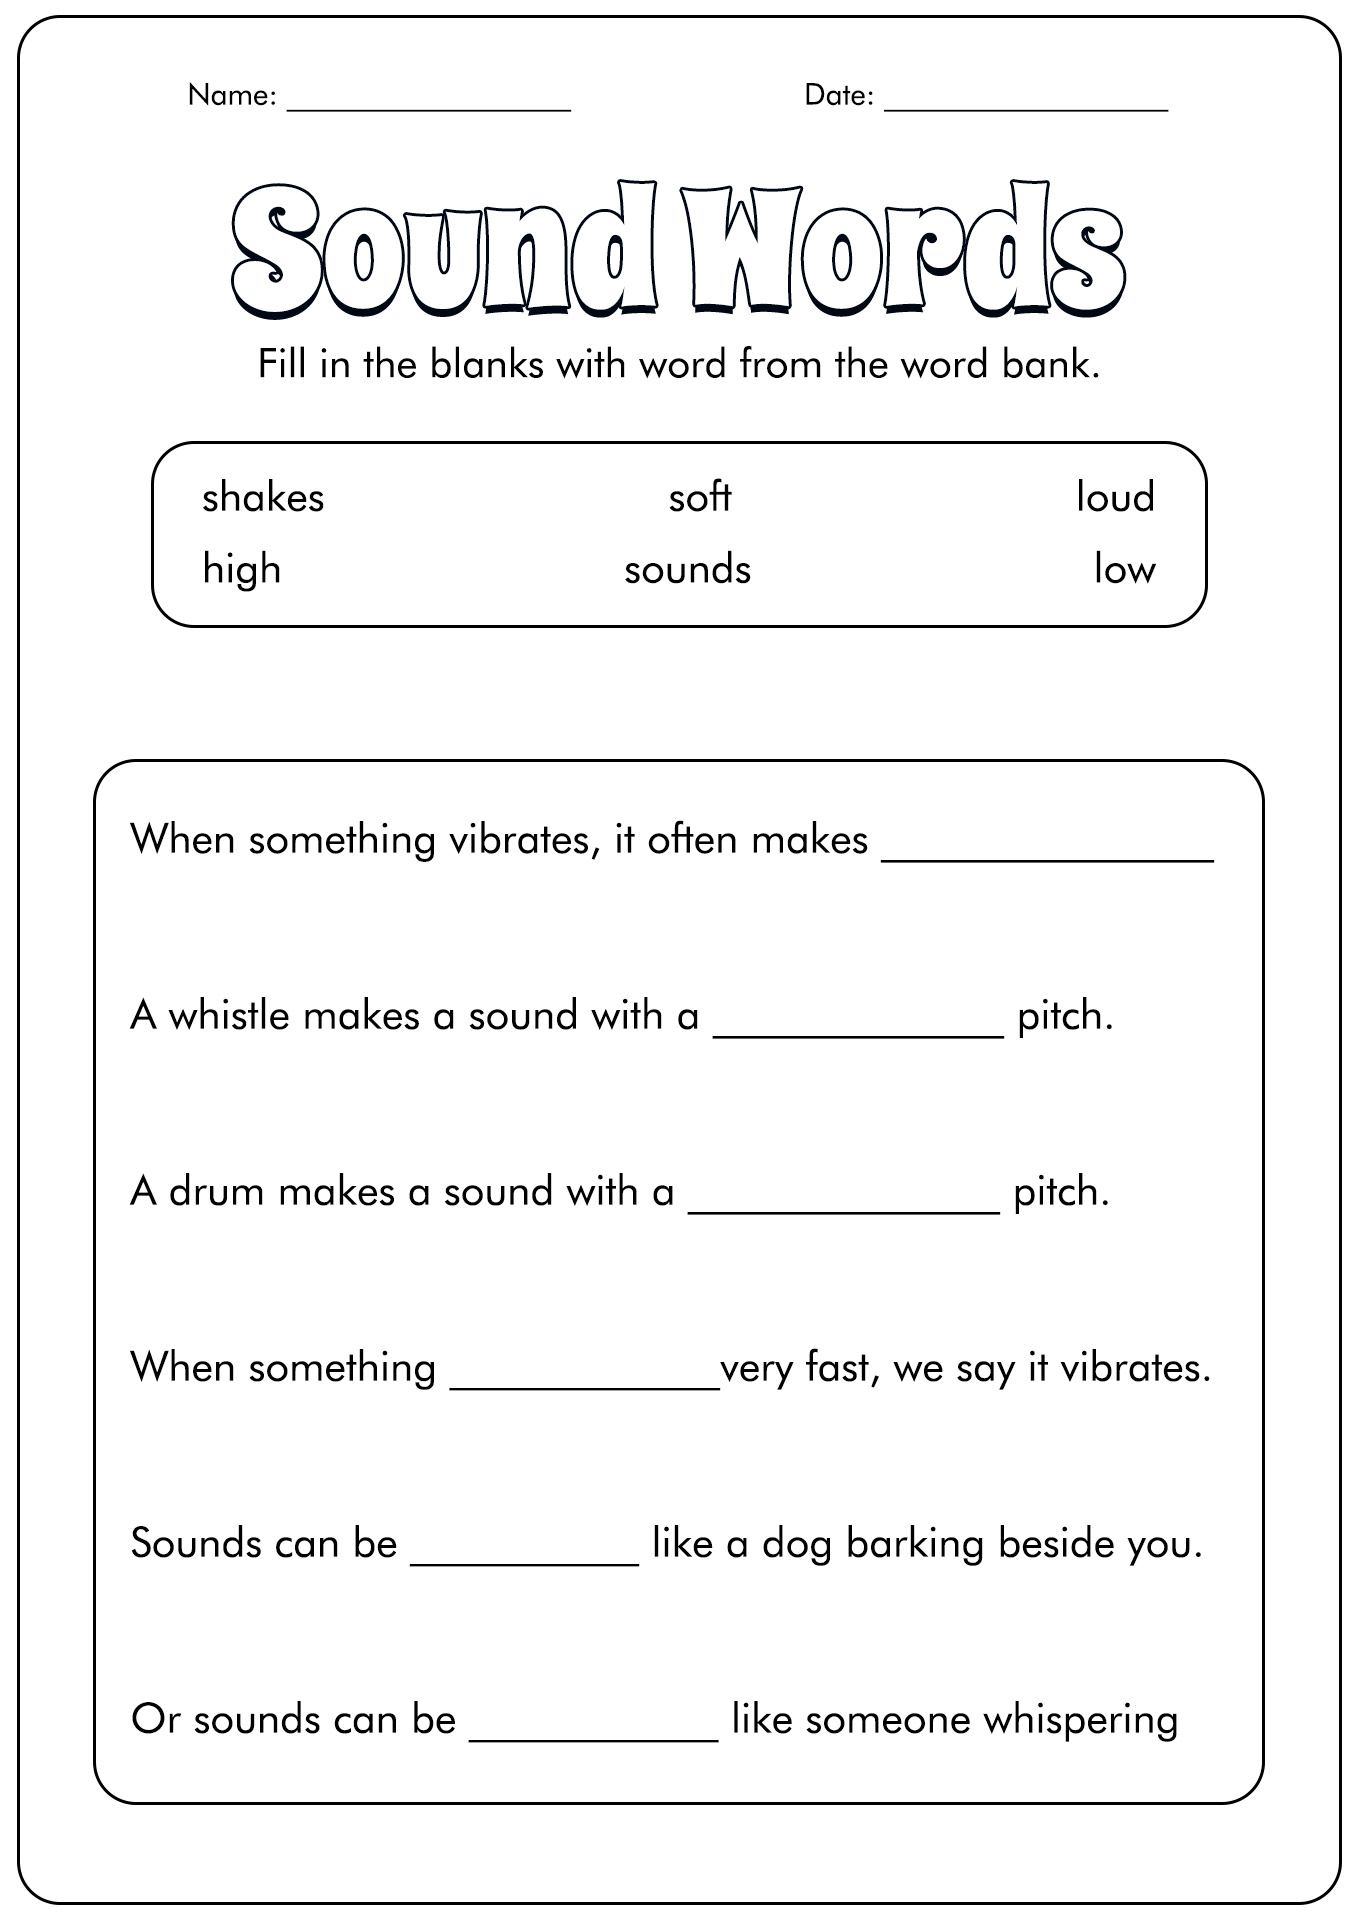 Sound Energy Worksheet Kindergarten